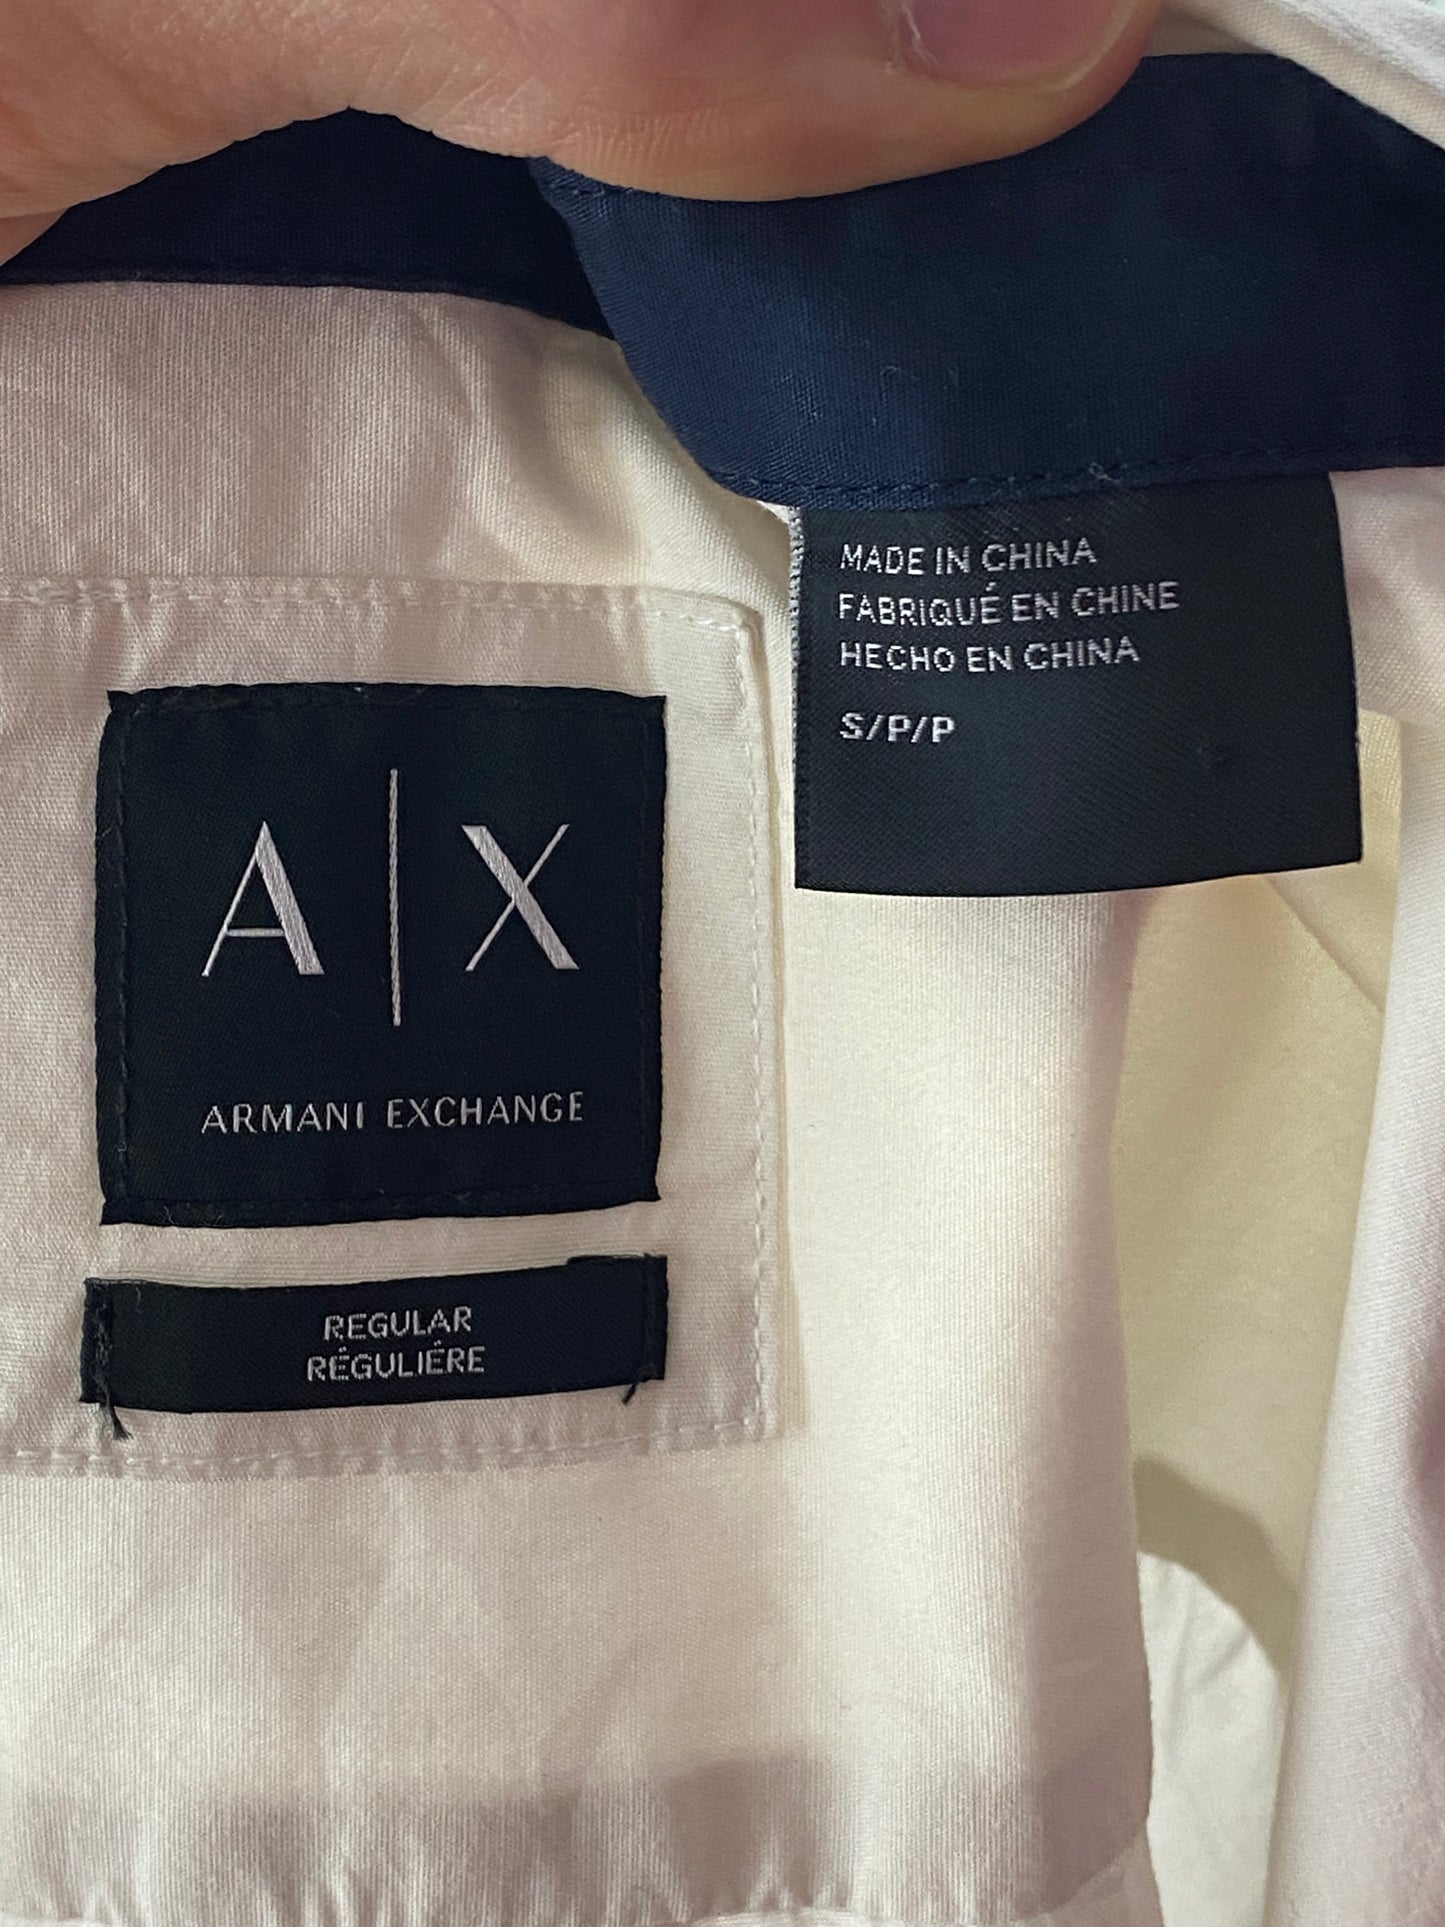 Armani Excange Vintage Men's Shirt